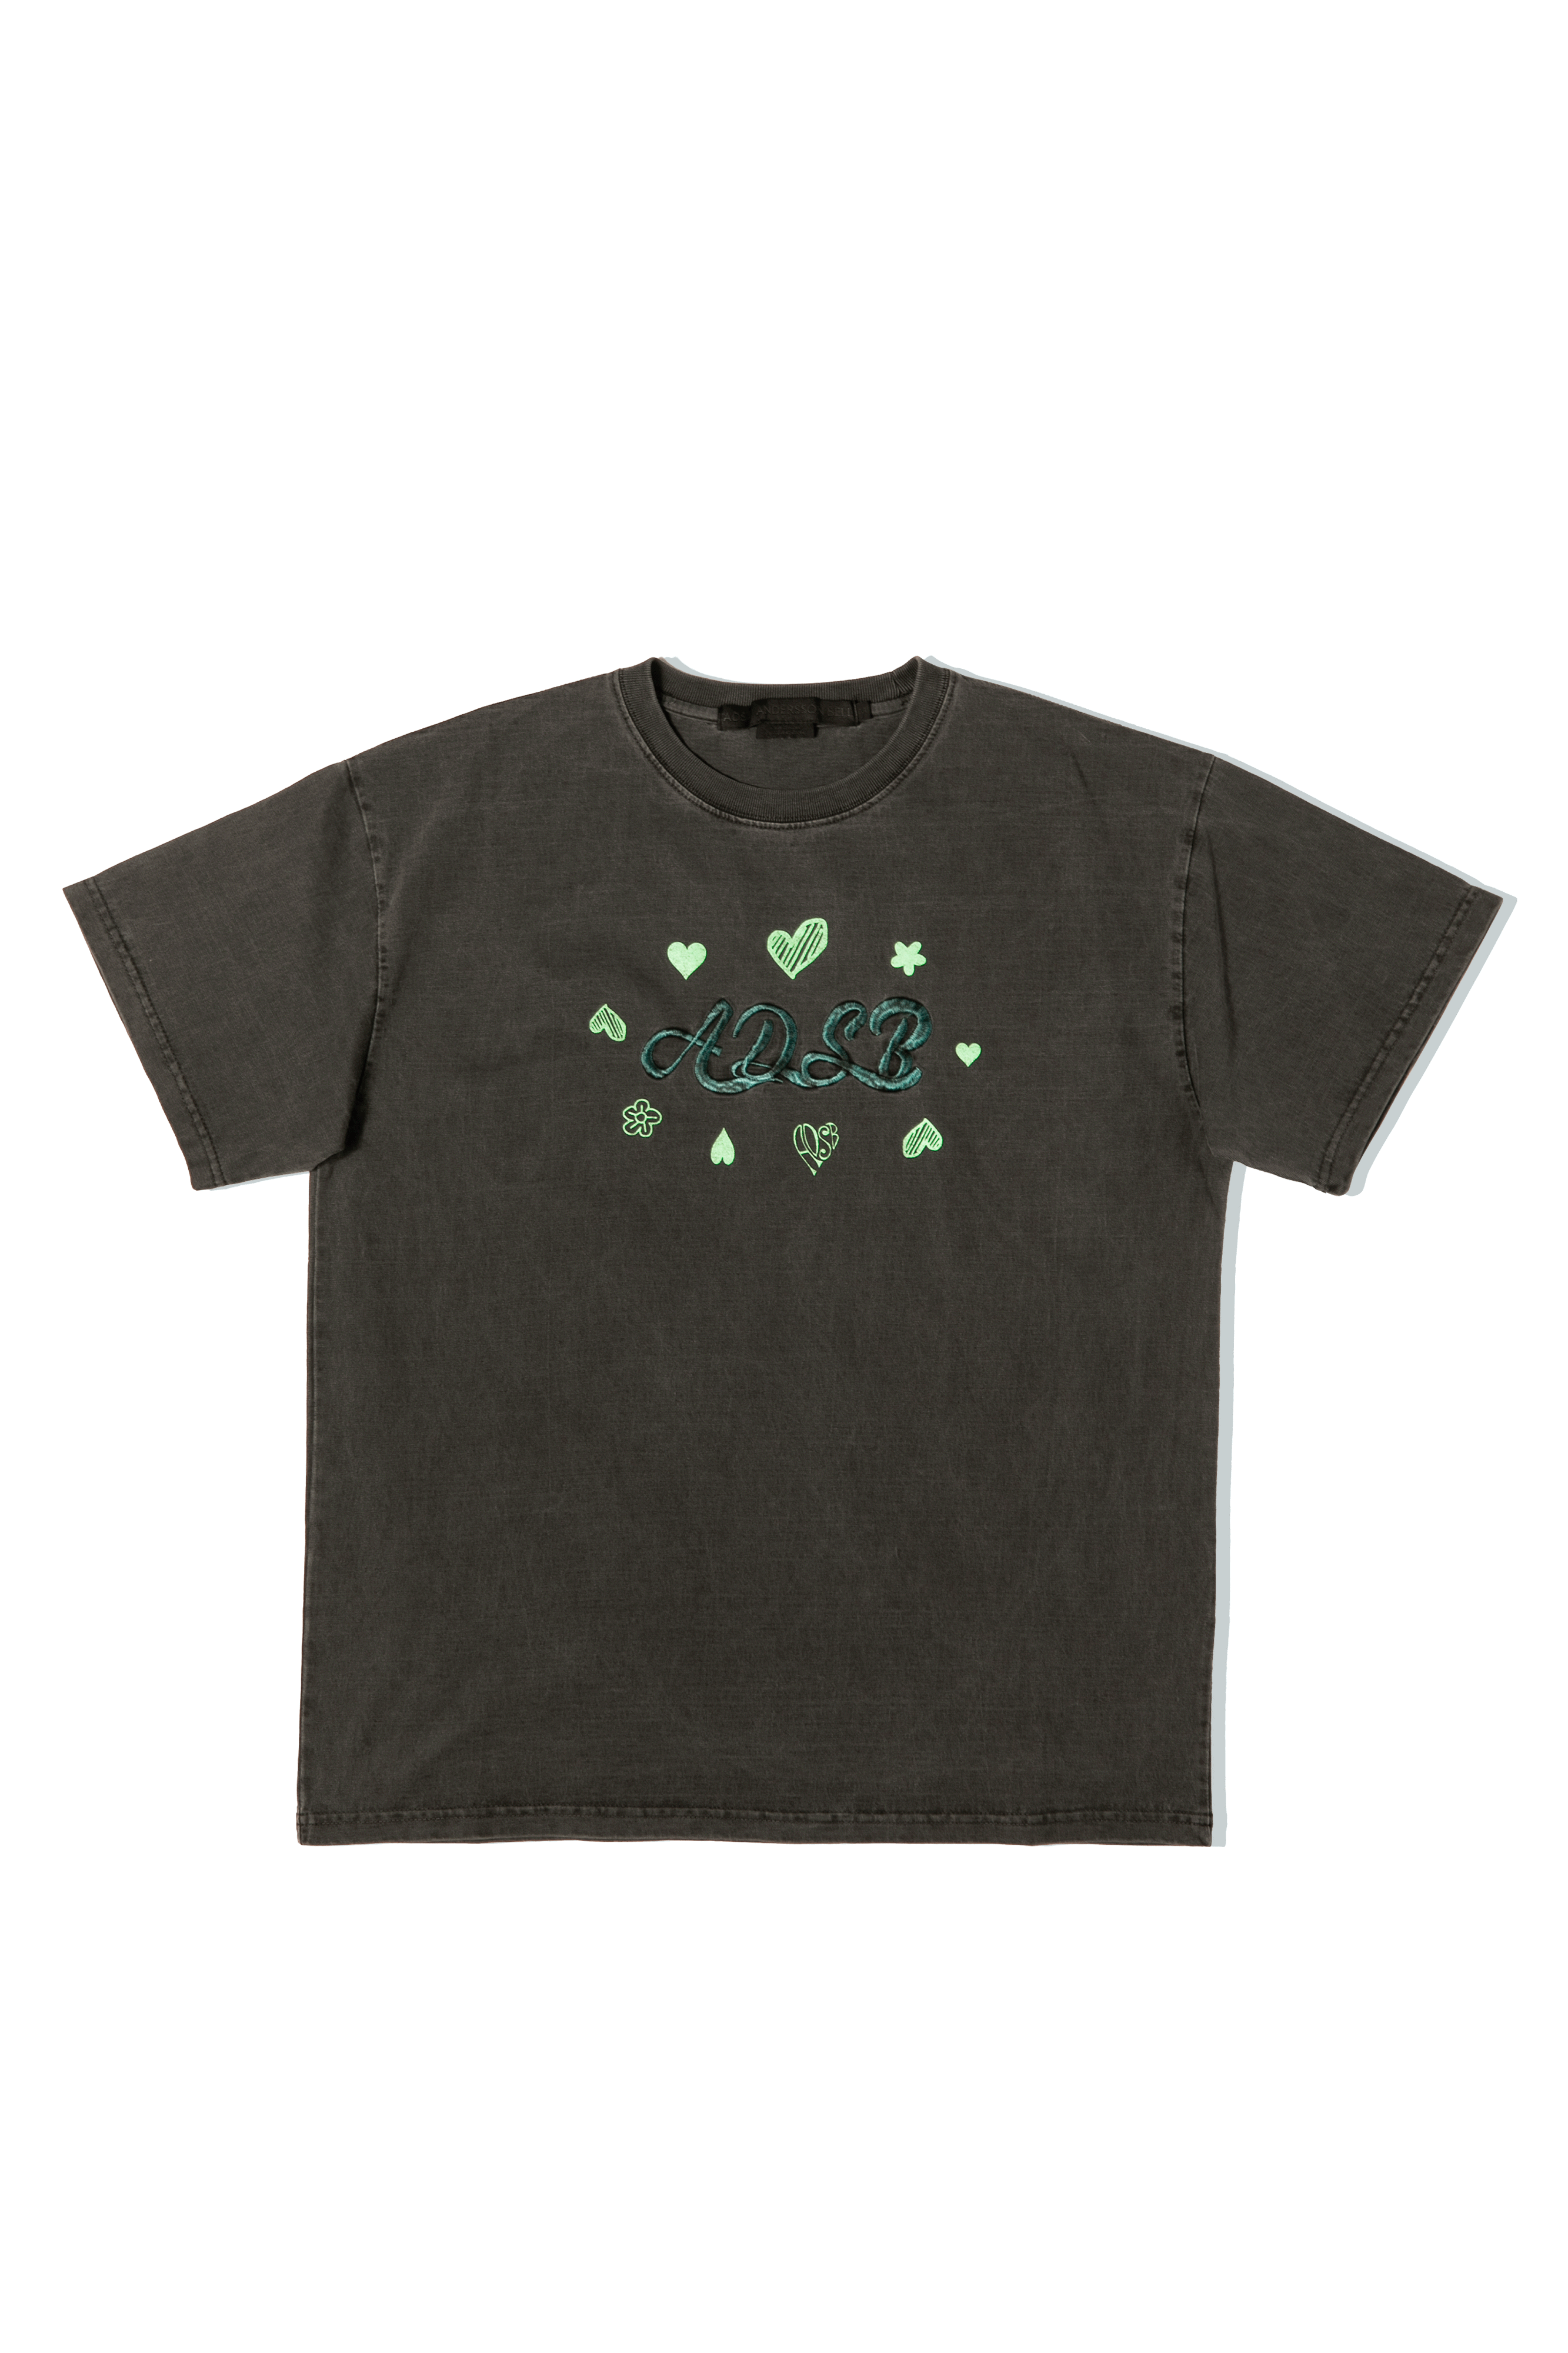 Adsb Hearts Card T-Shirts